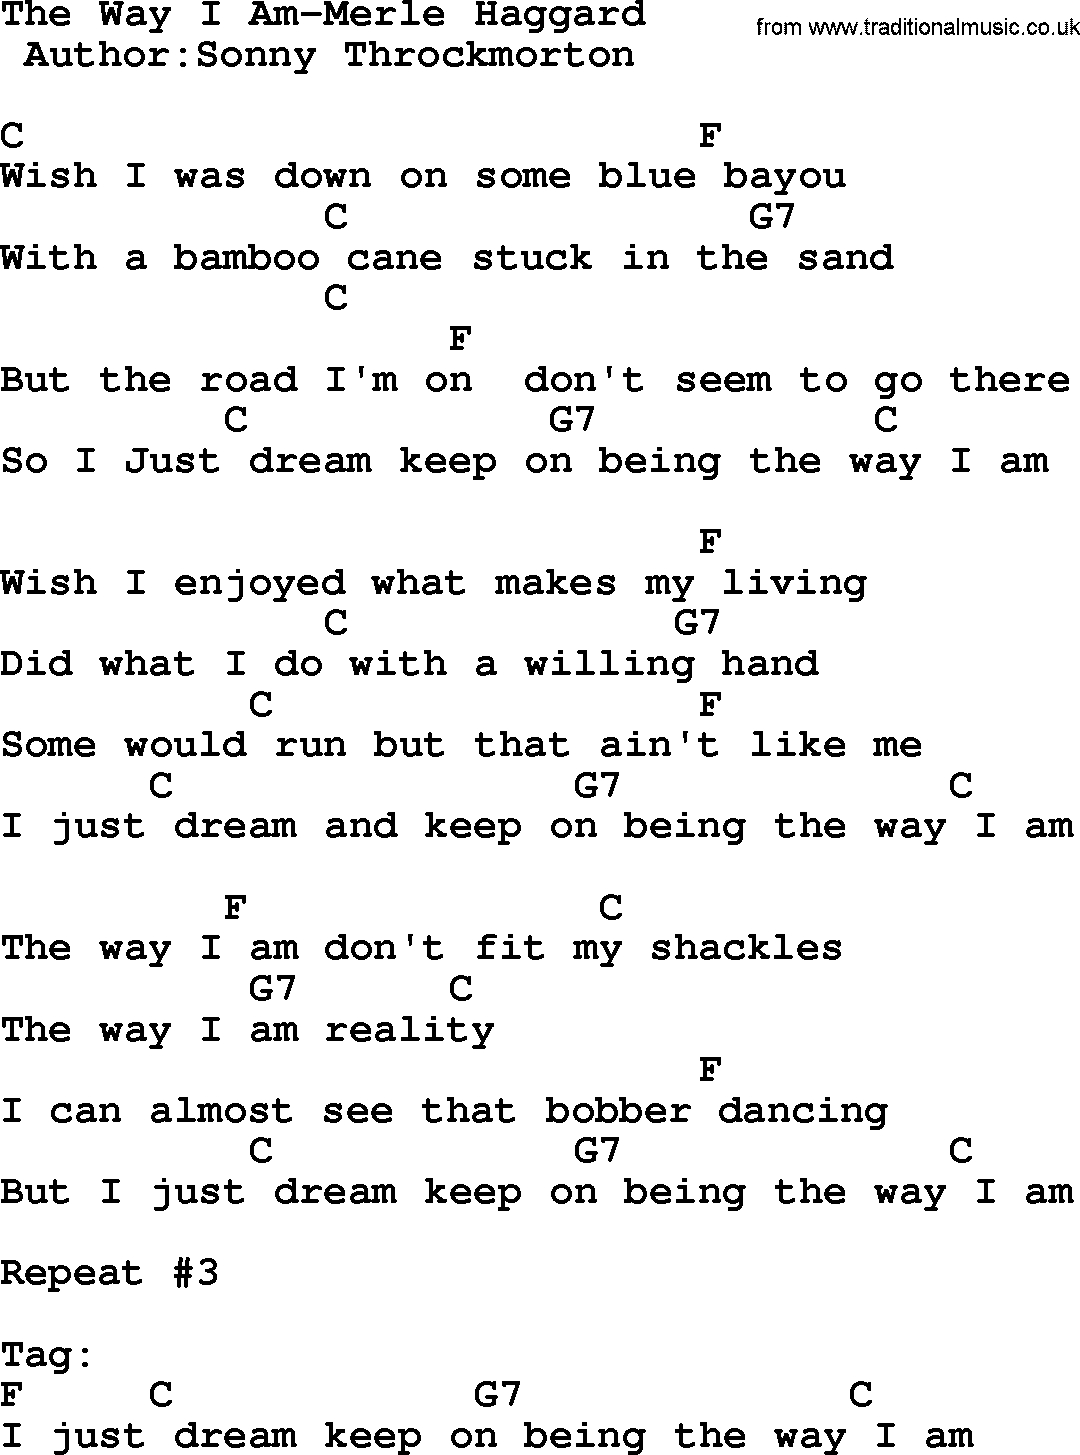 The Way I Am Chords Country Musicthe Way I Am Merle Haggard Lyrics And Chords